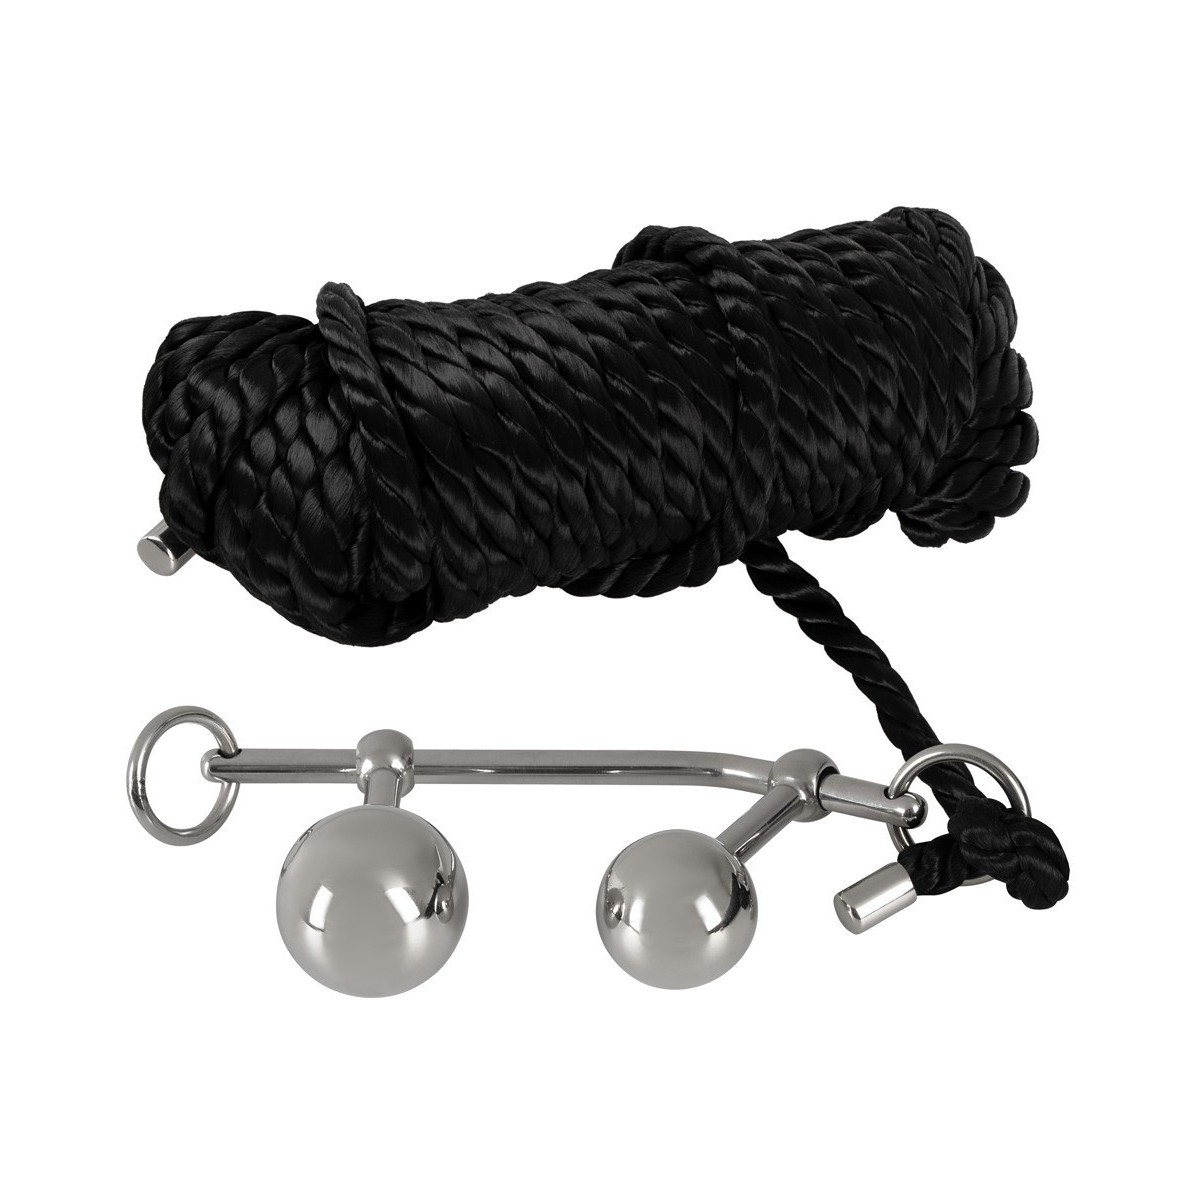 Corda Bondage con plugs with 10 m rope